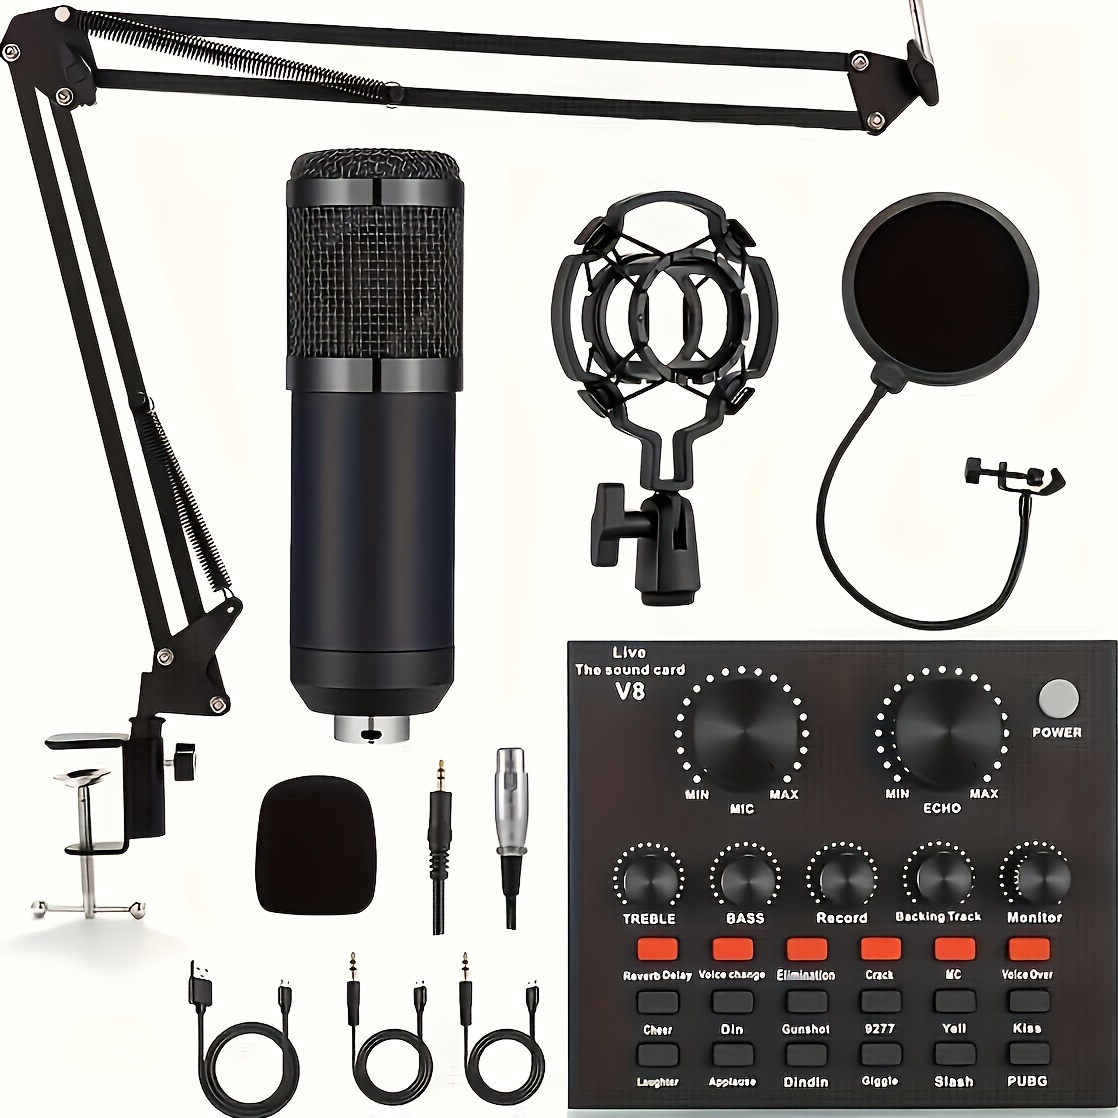 BM 800 Professional Audio Microphones V8 Pro Sound Card Set BM800